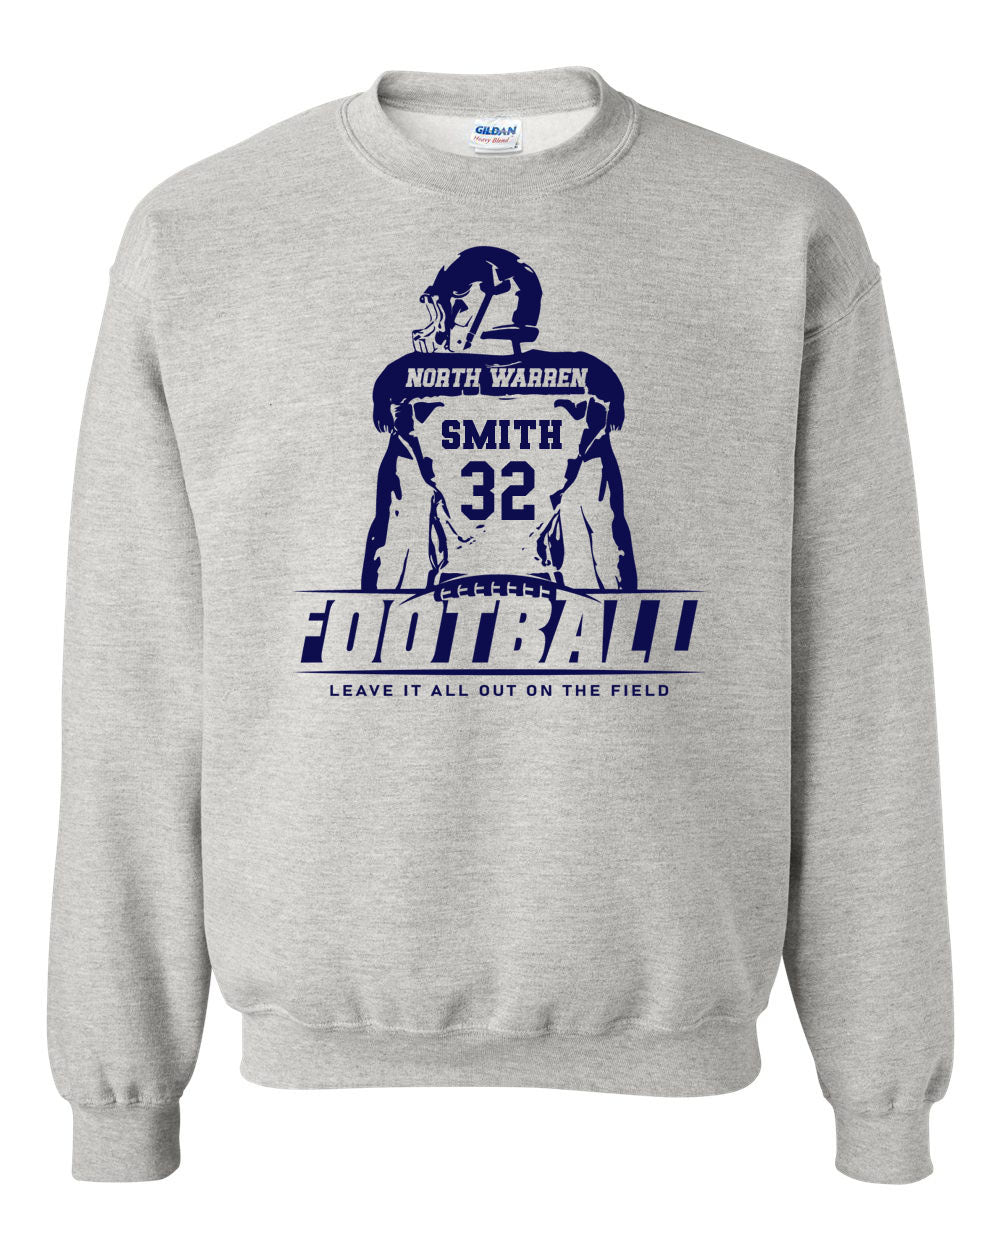 NW Football Design 8 non hooded sweatshirt